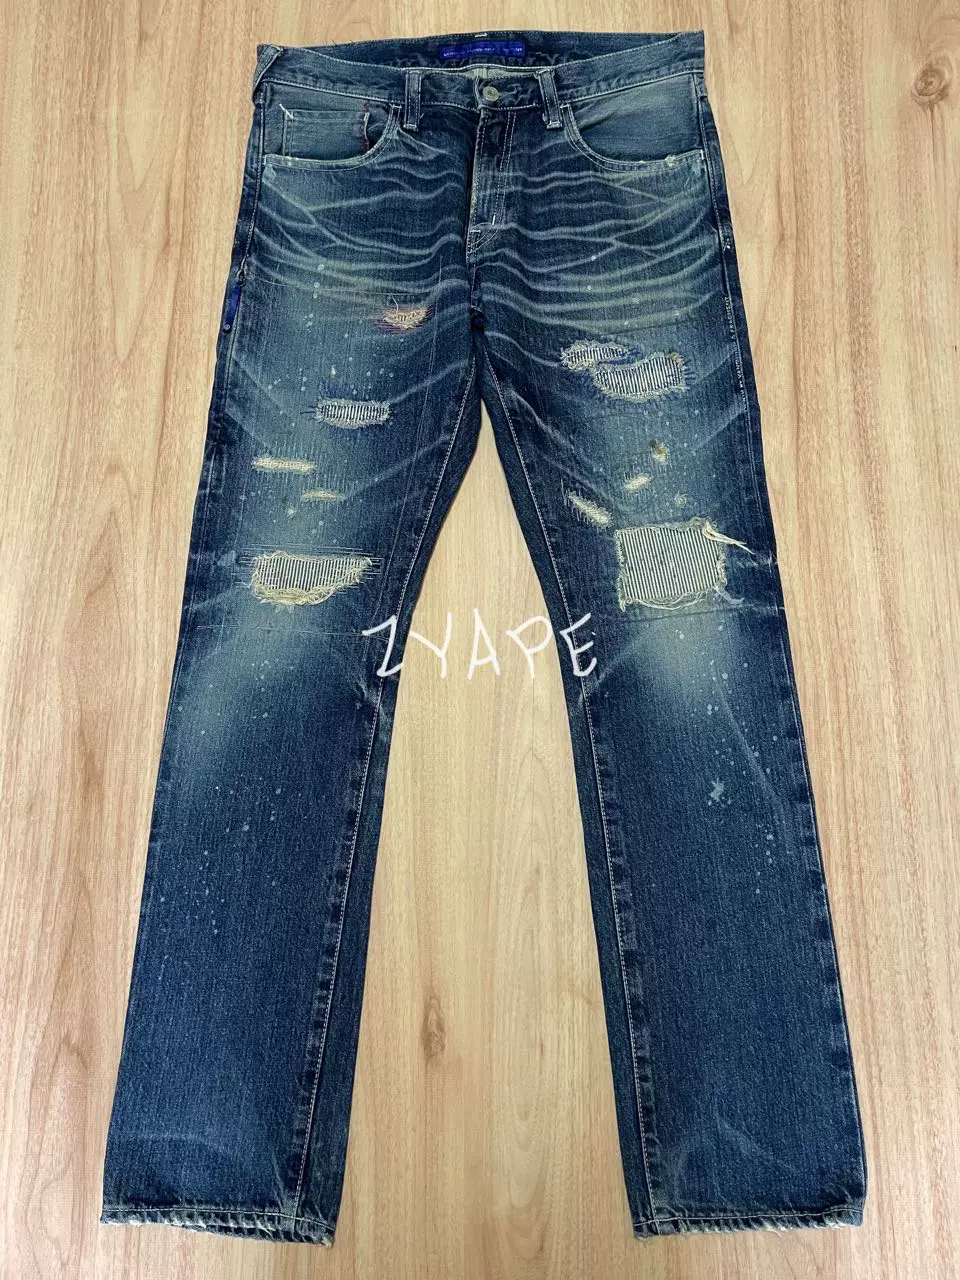 售完DENIM BY VANQUISH & FRAGMENT 三方联名CLOT长寿闪电牛仔裤-Taobao